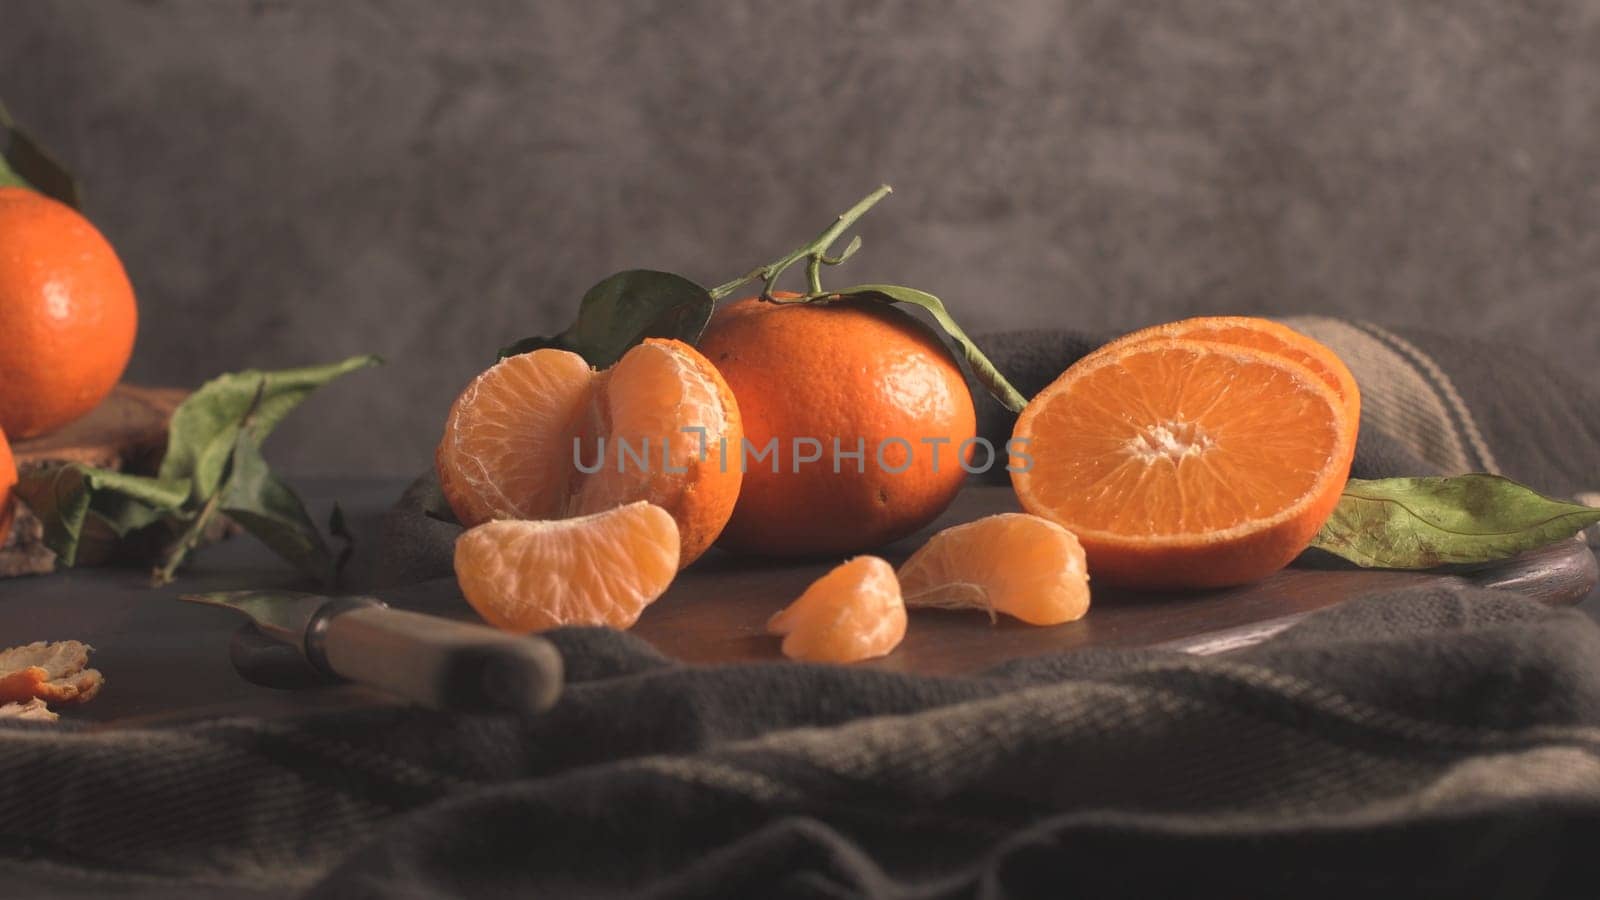 Fresh mandarin oranges or tangerines by homydesign